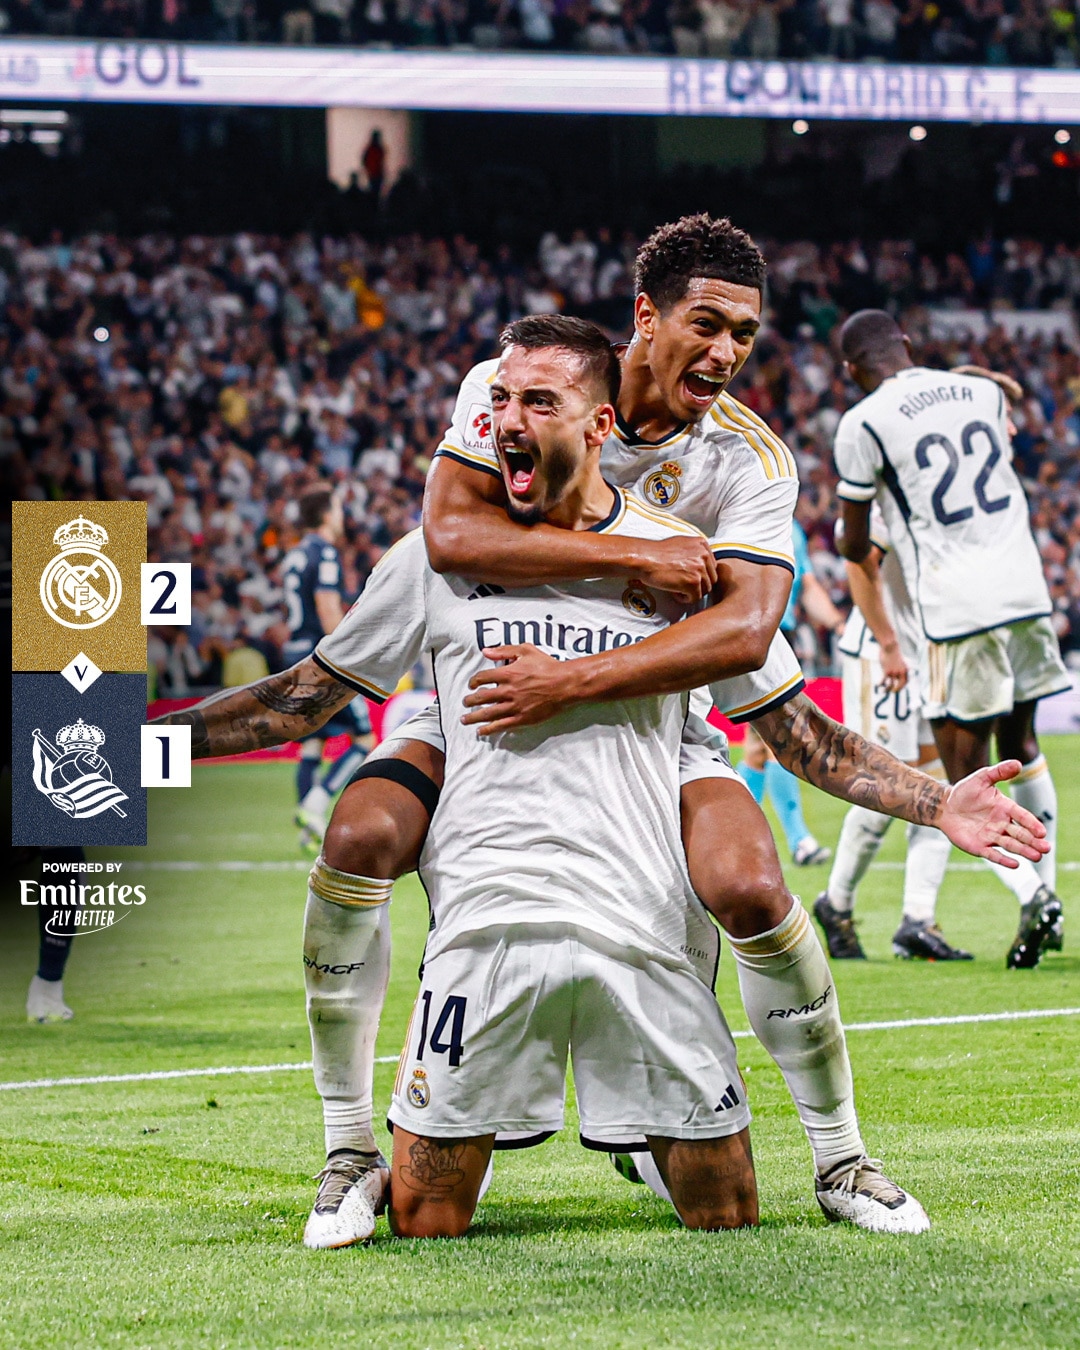 Jude bellingham bỏ lỡ kỷ lục lịch sử, Real Madrid thắng nhọc nhằn Real Sociedad - Ảnh 1.